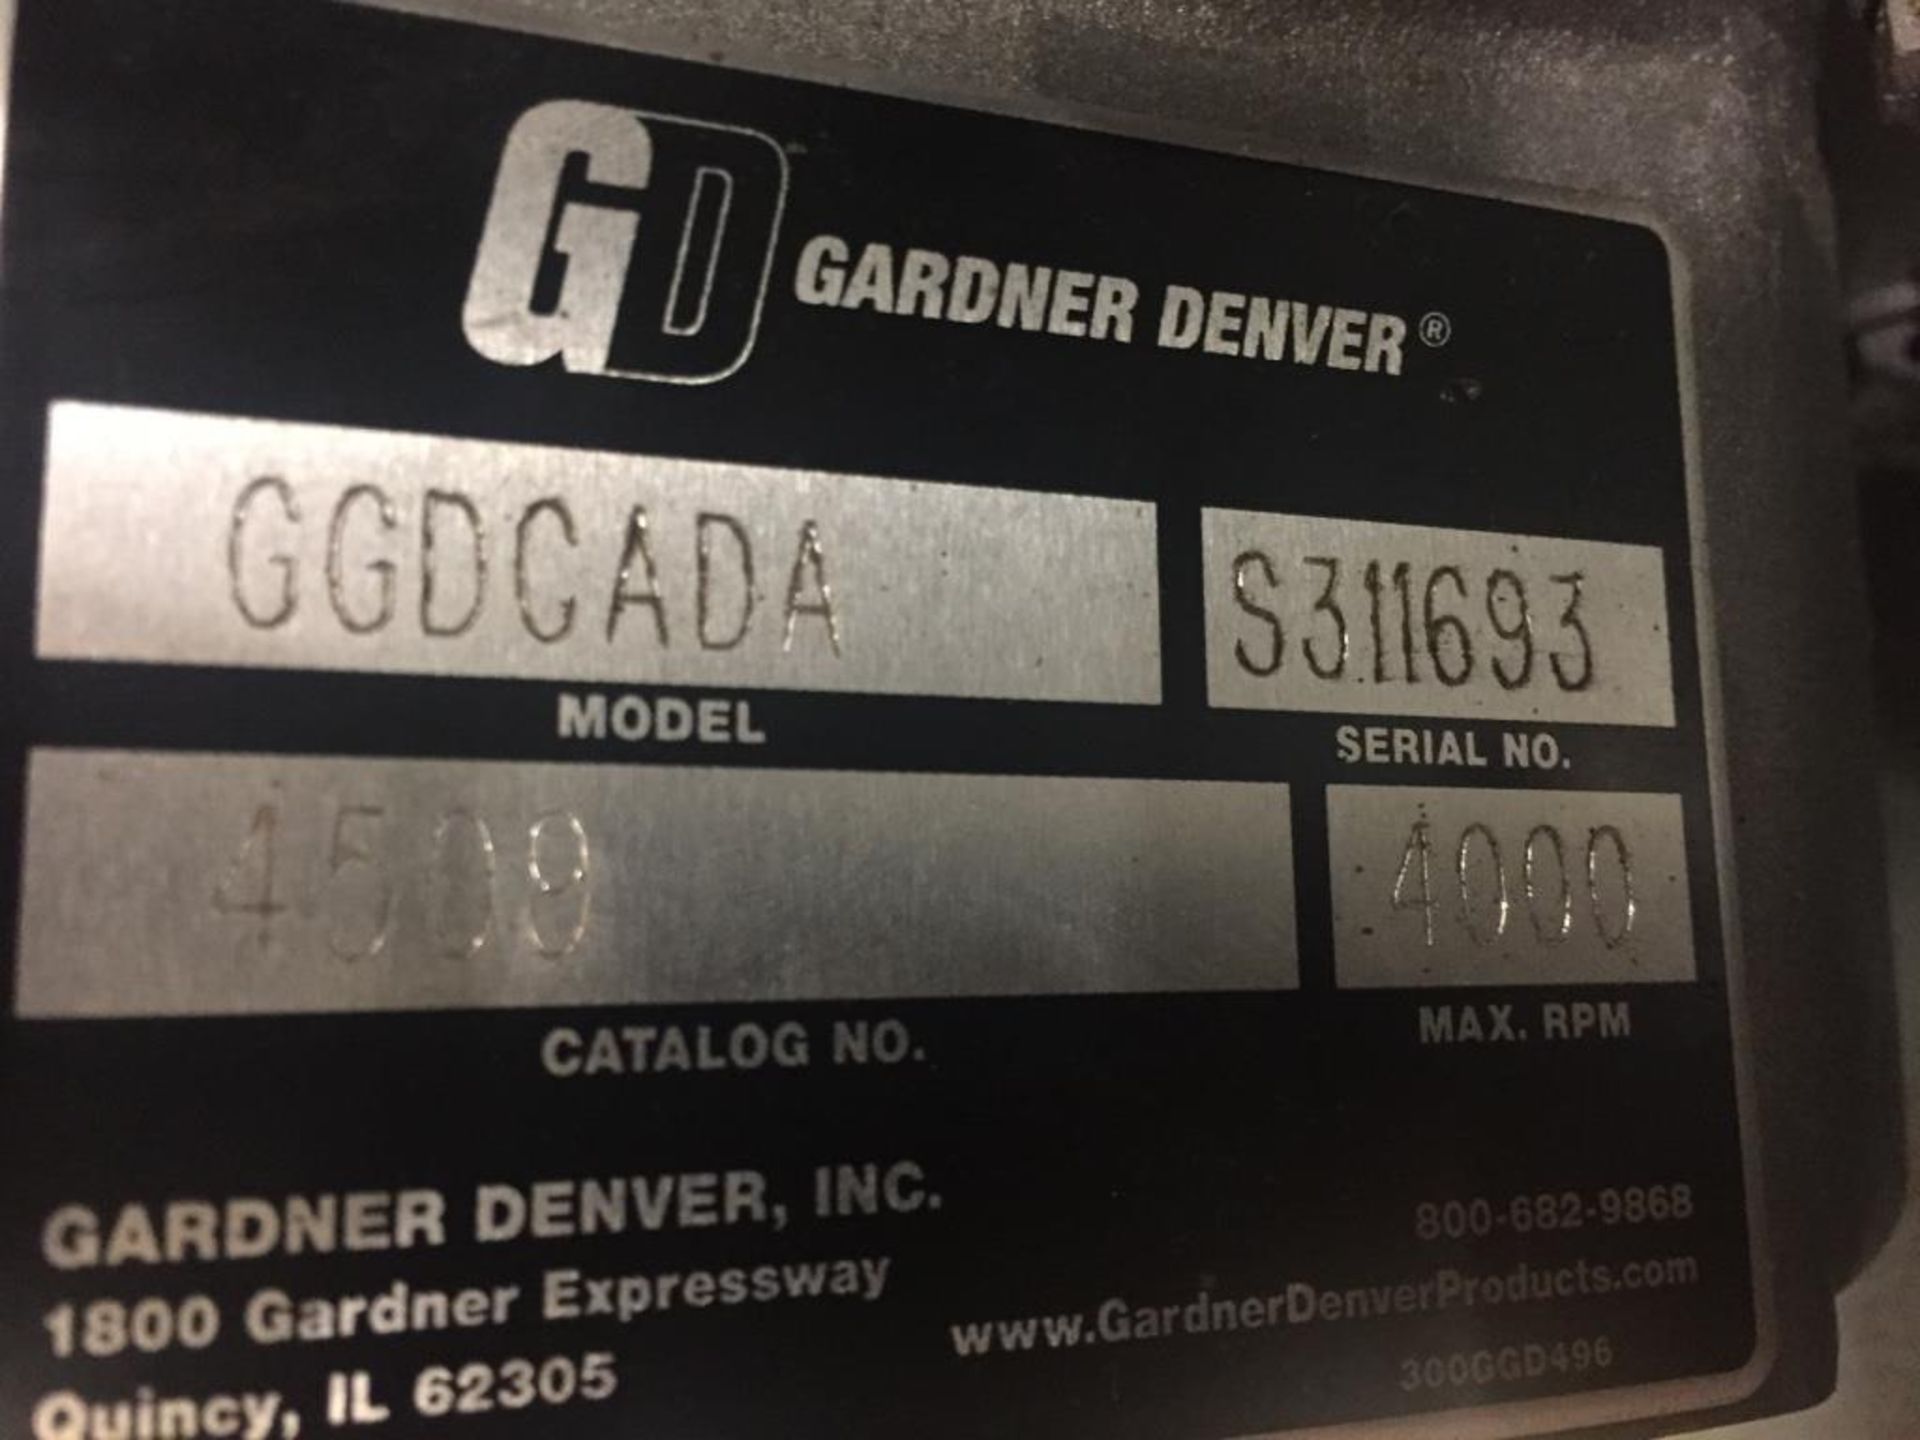 Blower Package With Gardner Denver Blower Model GGDCADA S/N S311693 Catalog 4509 Max RPM 4000 - Image 3 of 4